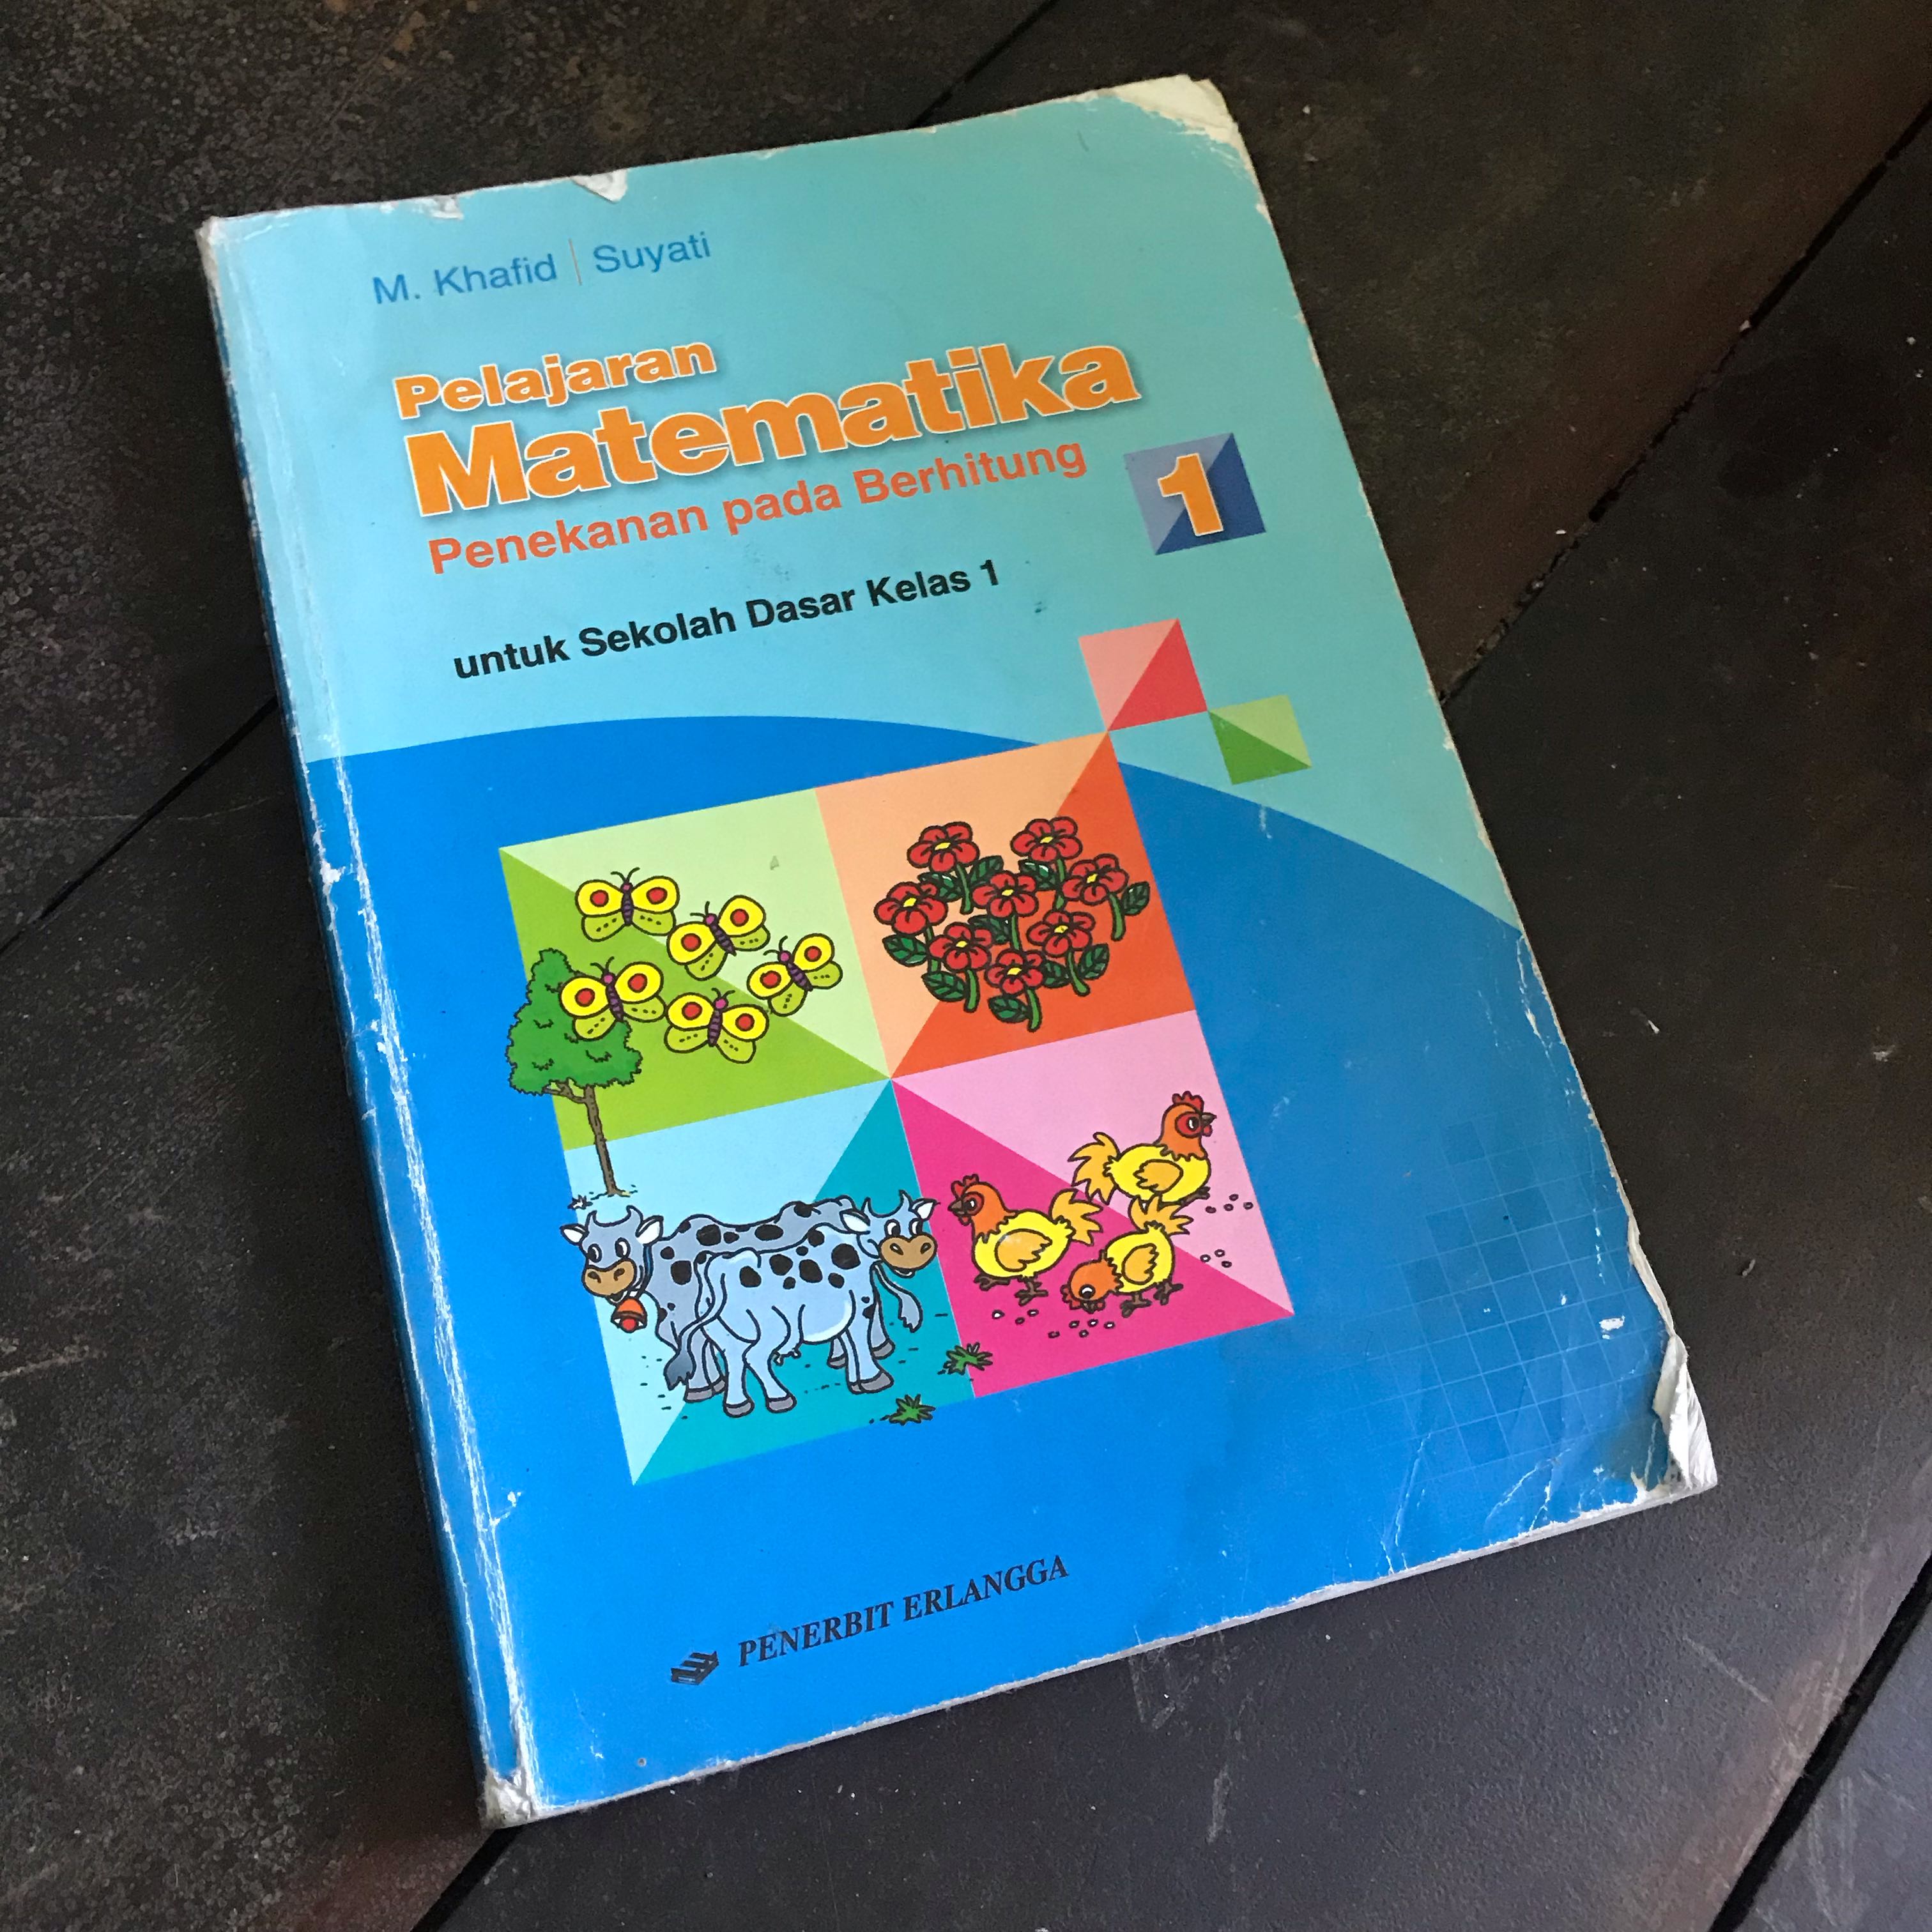 Mauvivo Buku Matematika berhitung SD kelas 1 Books & Stationery Textbooks on Carousell